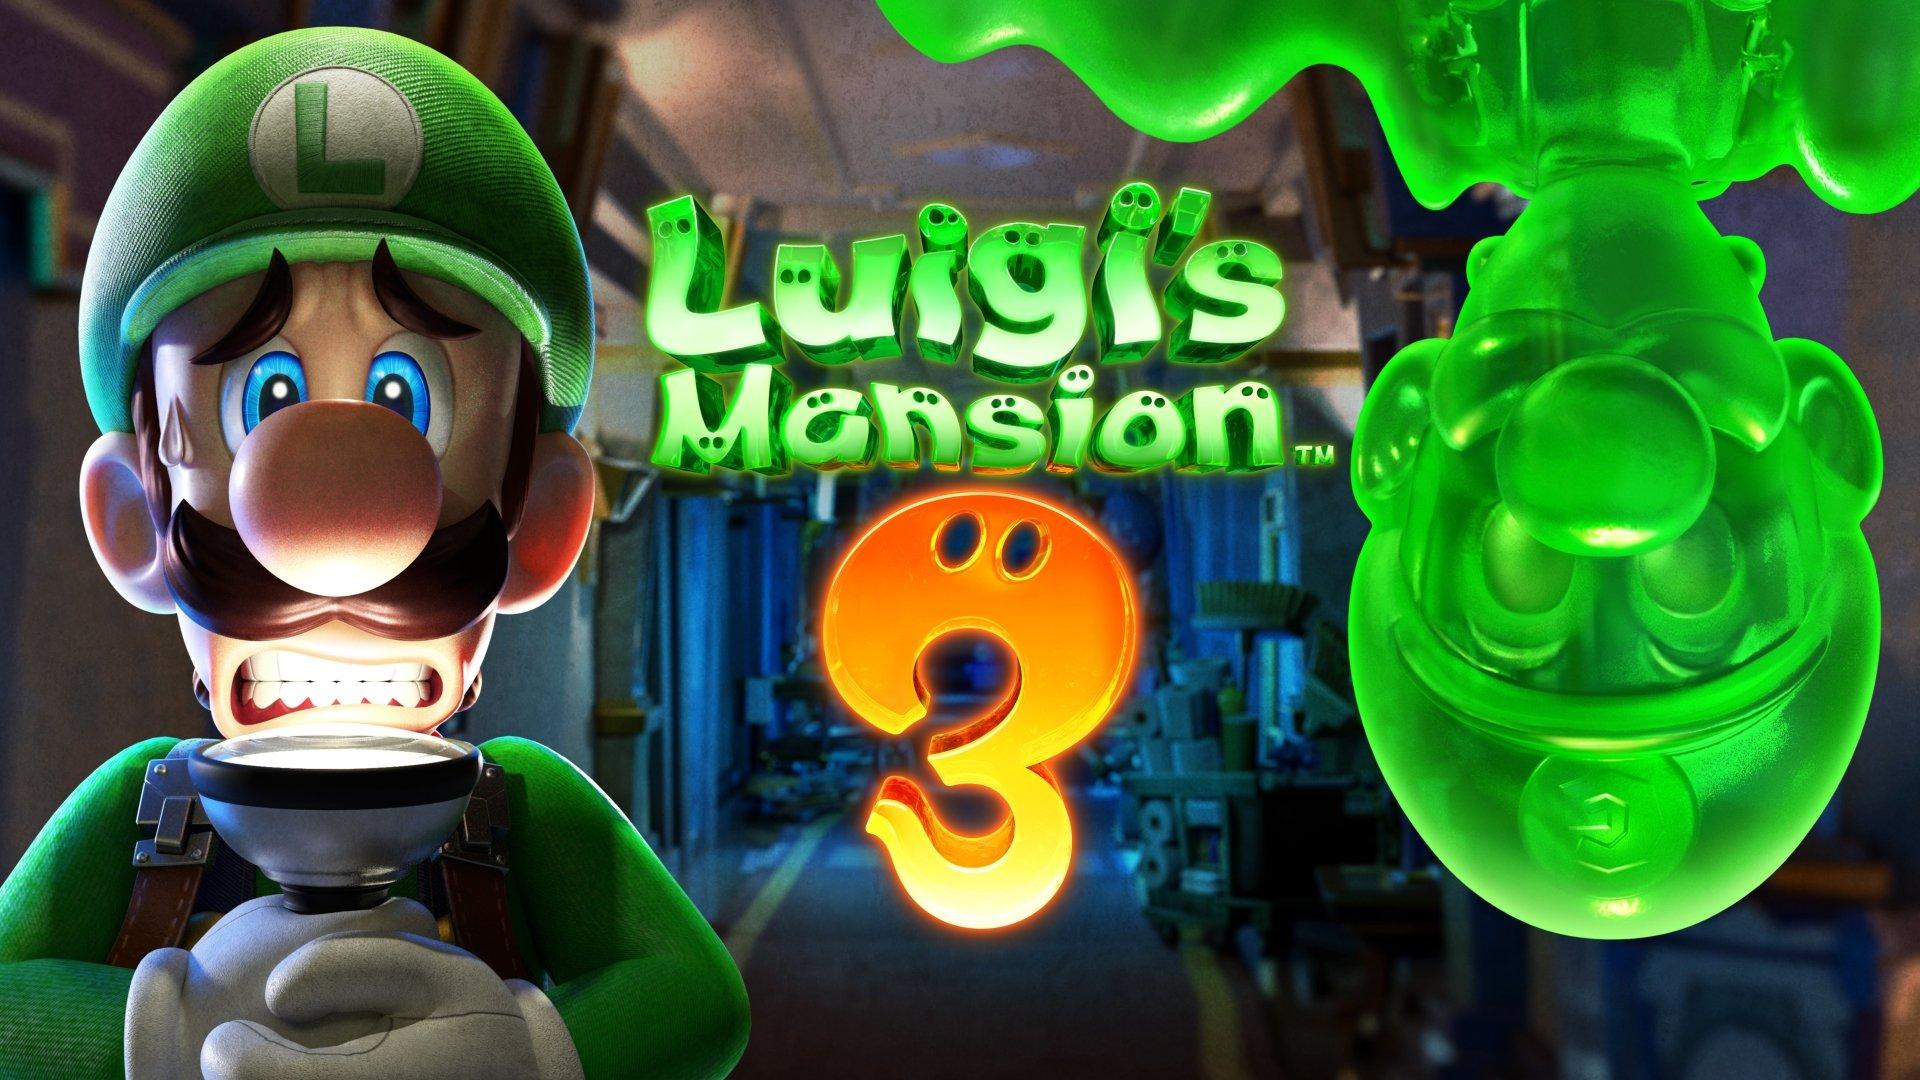 4K HD Luigi's Mansion 3 Wallpaper You Need to Make Your Desktop